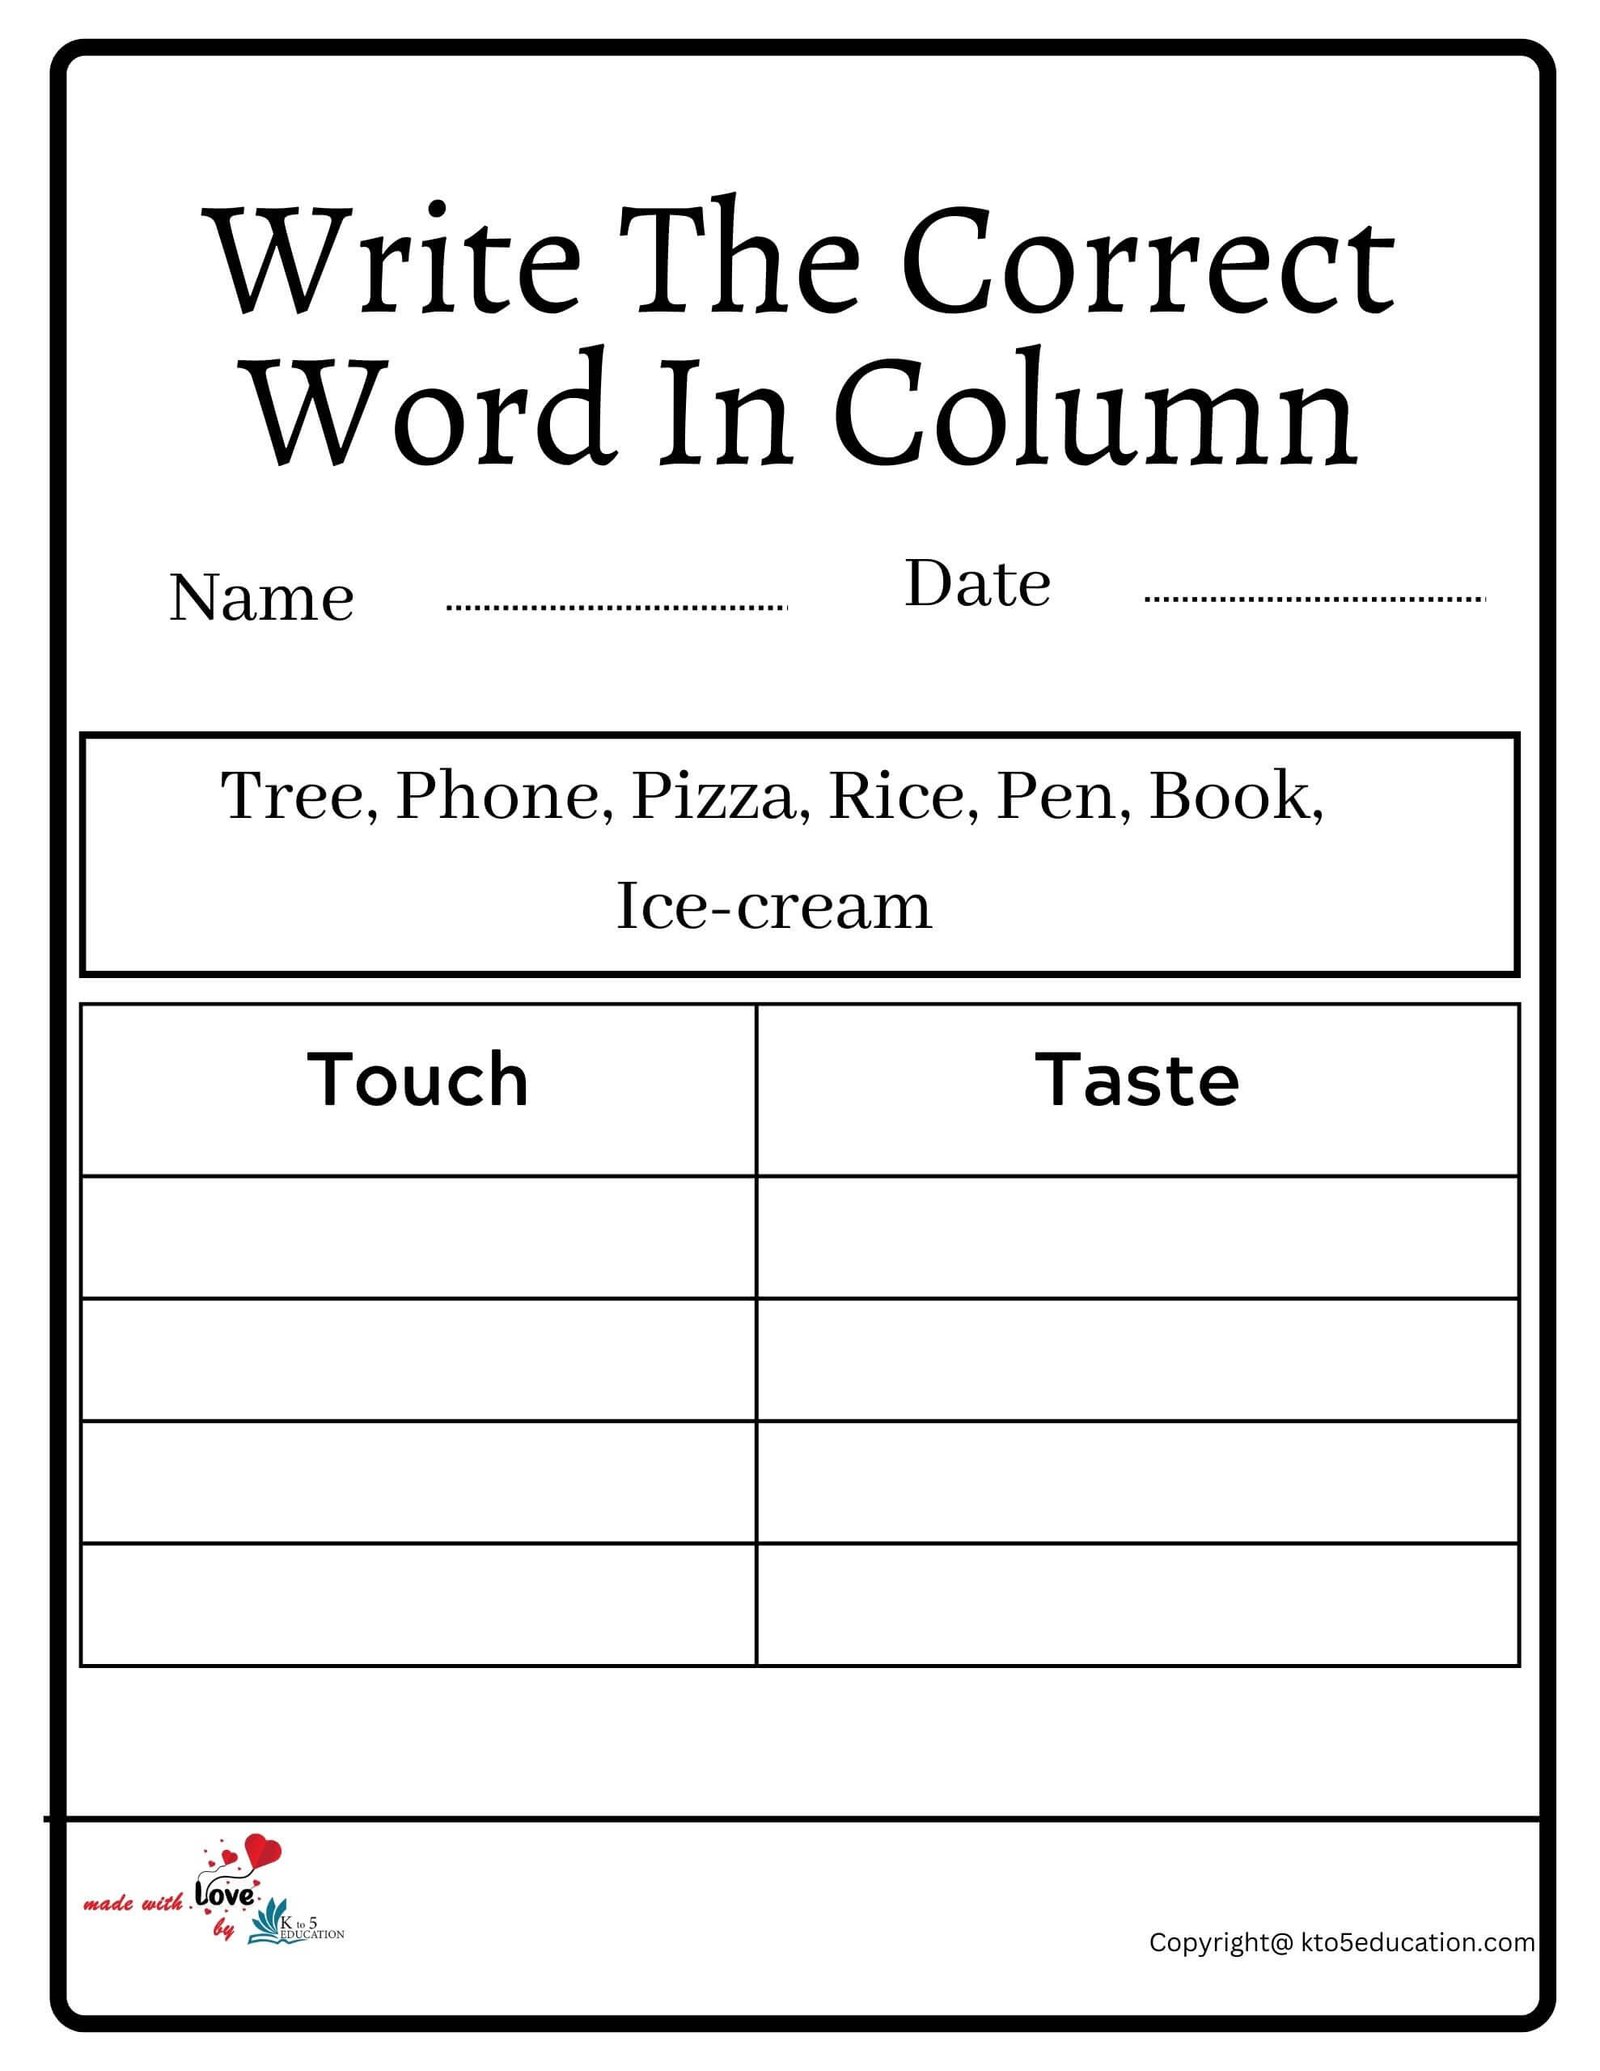 Write The Correct Word In Column Worksheet 2